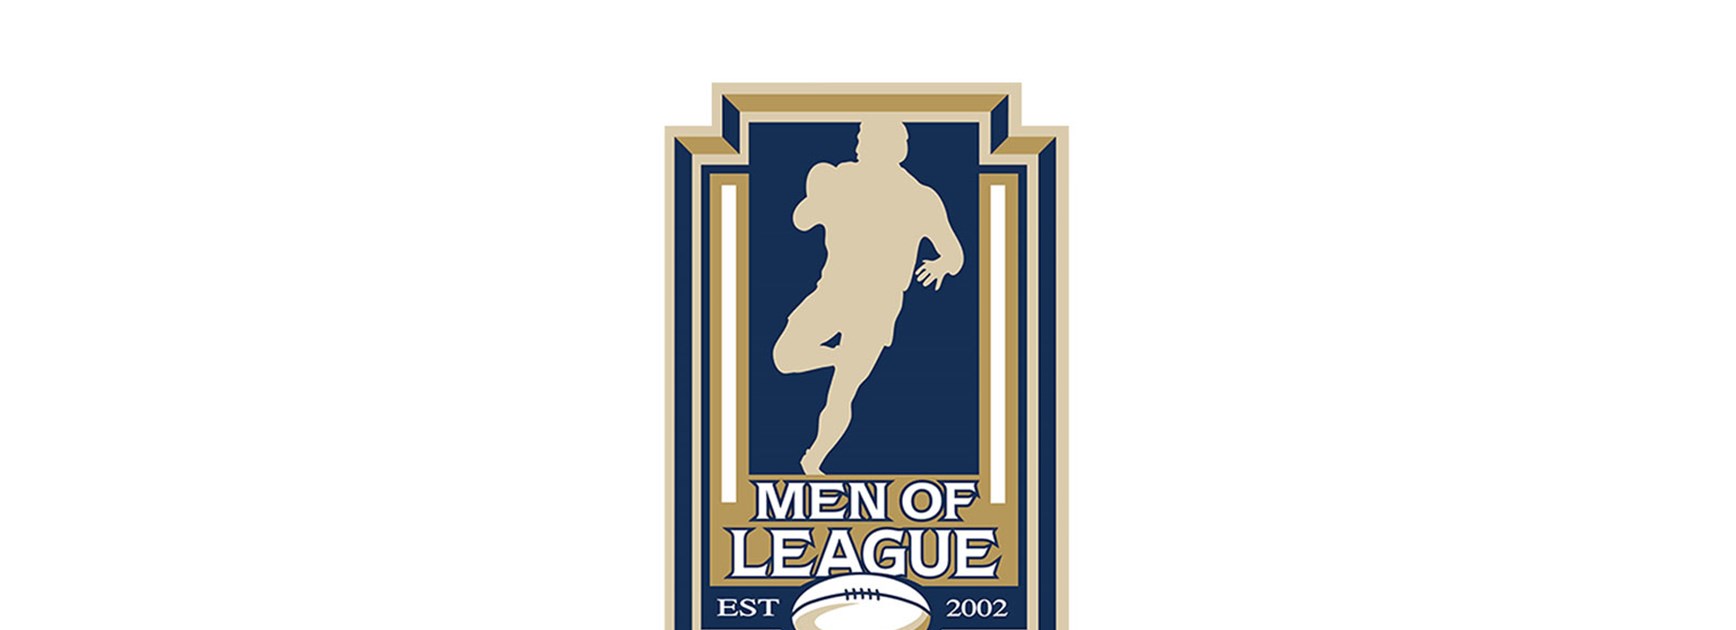 Far North Queensland Men of League function